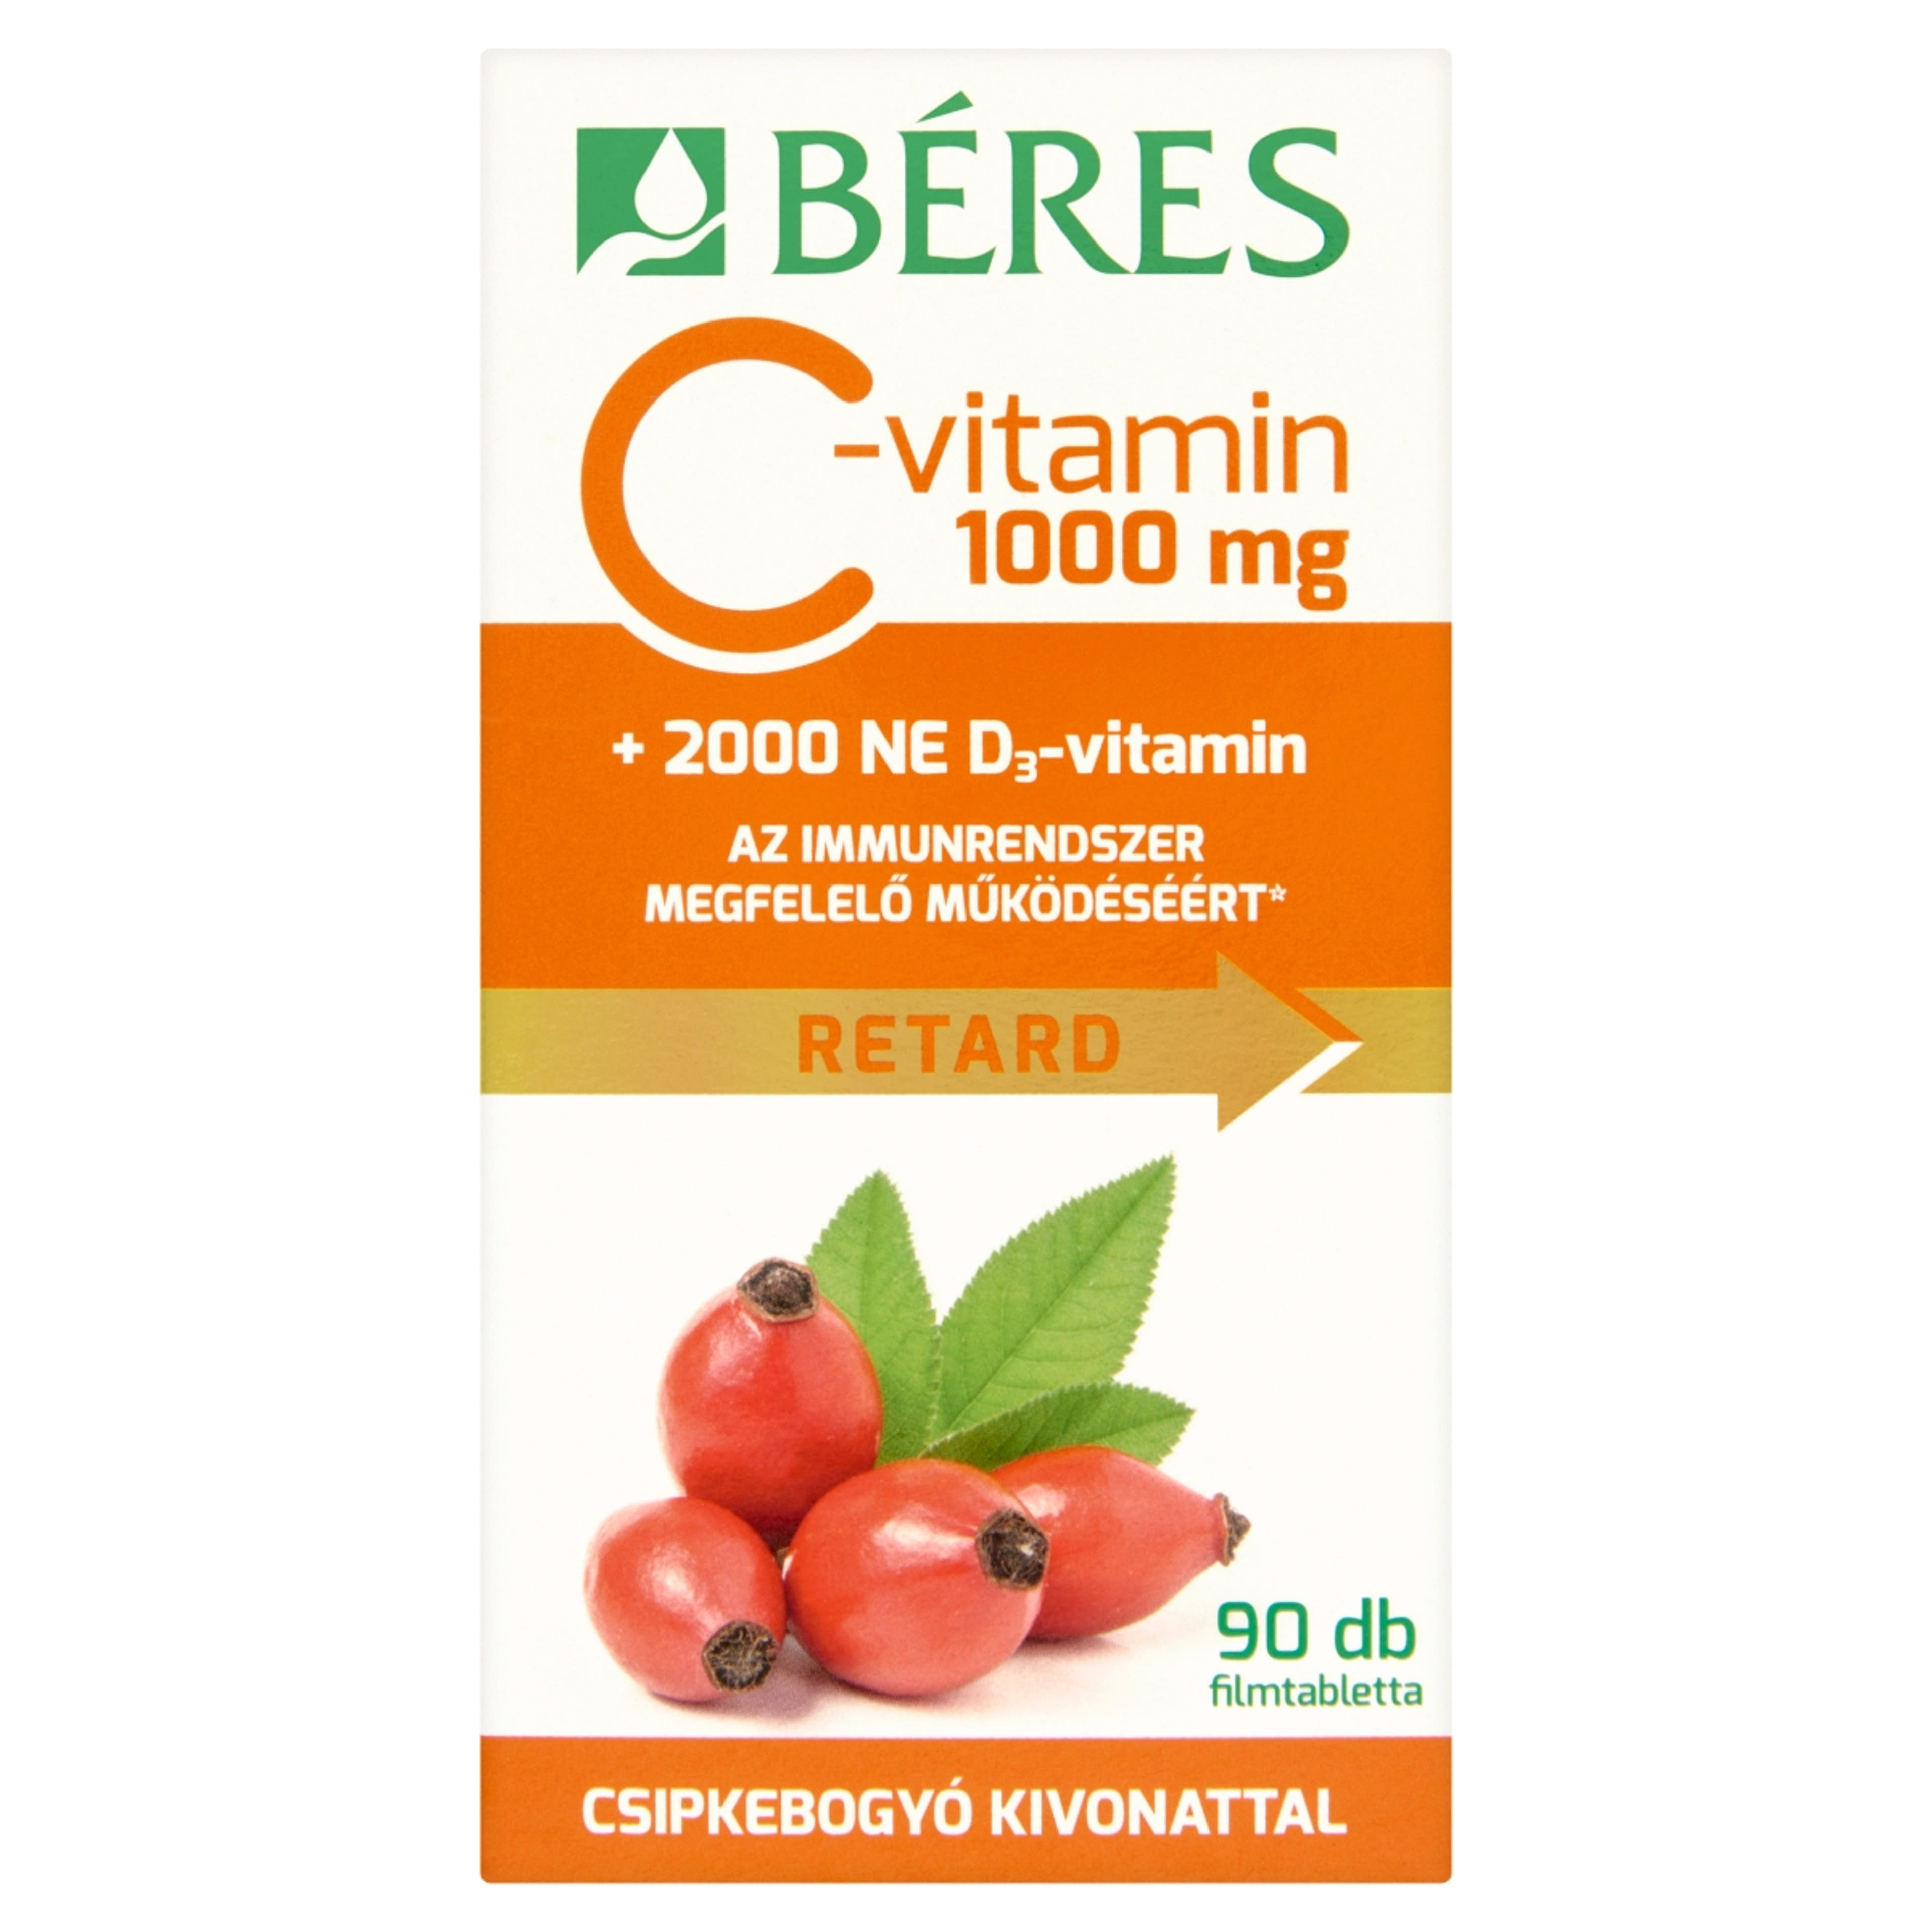 Béres C-vitamin 1000mg Retard filmtabletta csipkebogyó+ 2000 NE D3-vitamin - 90 db